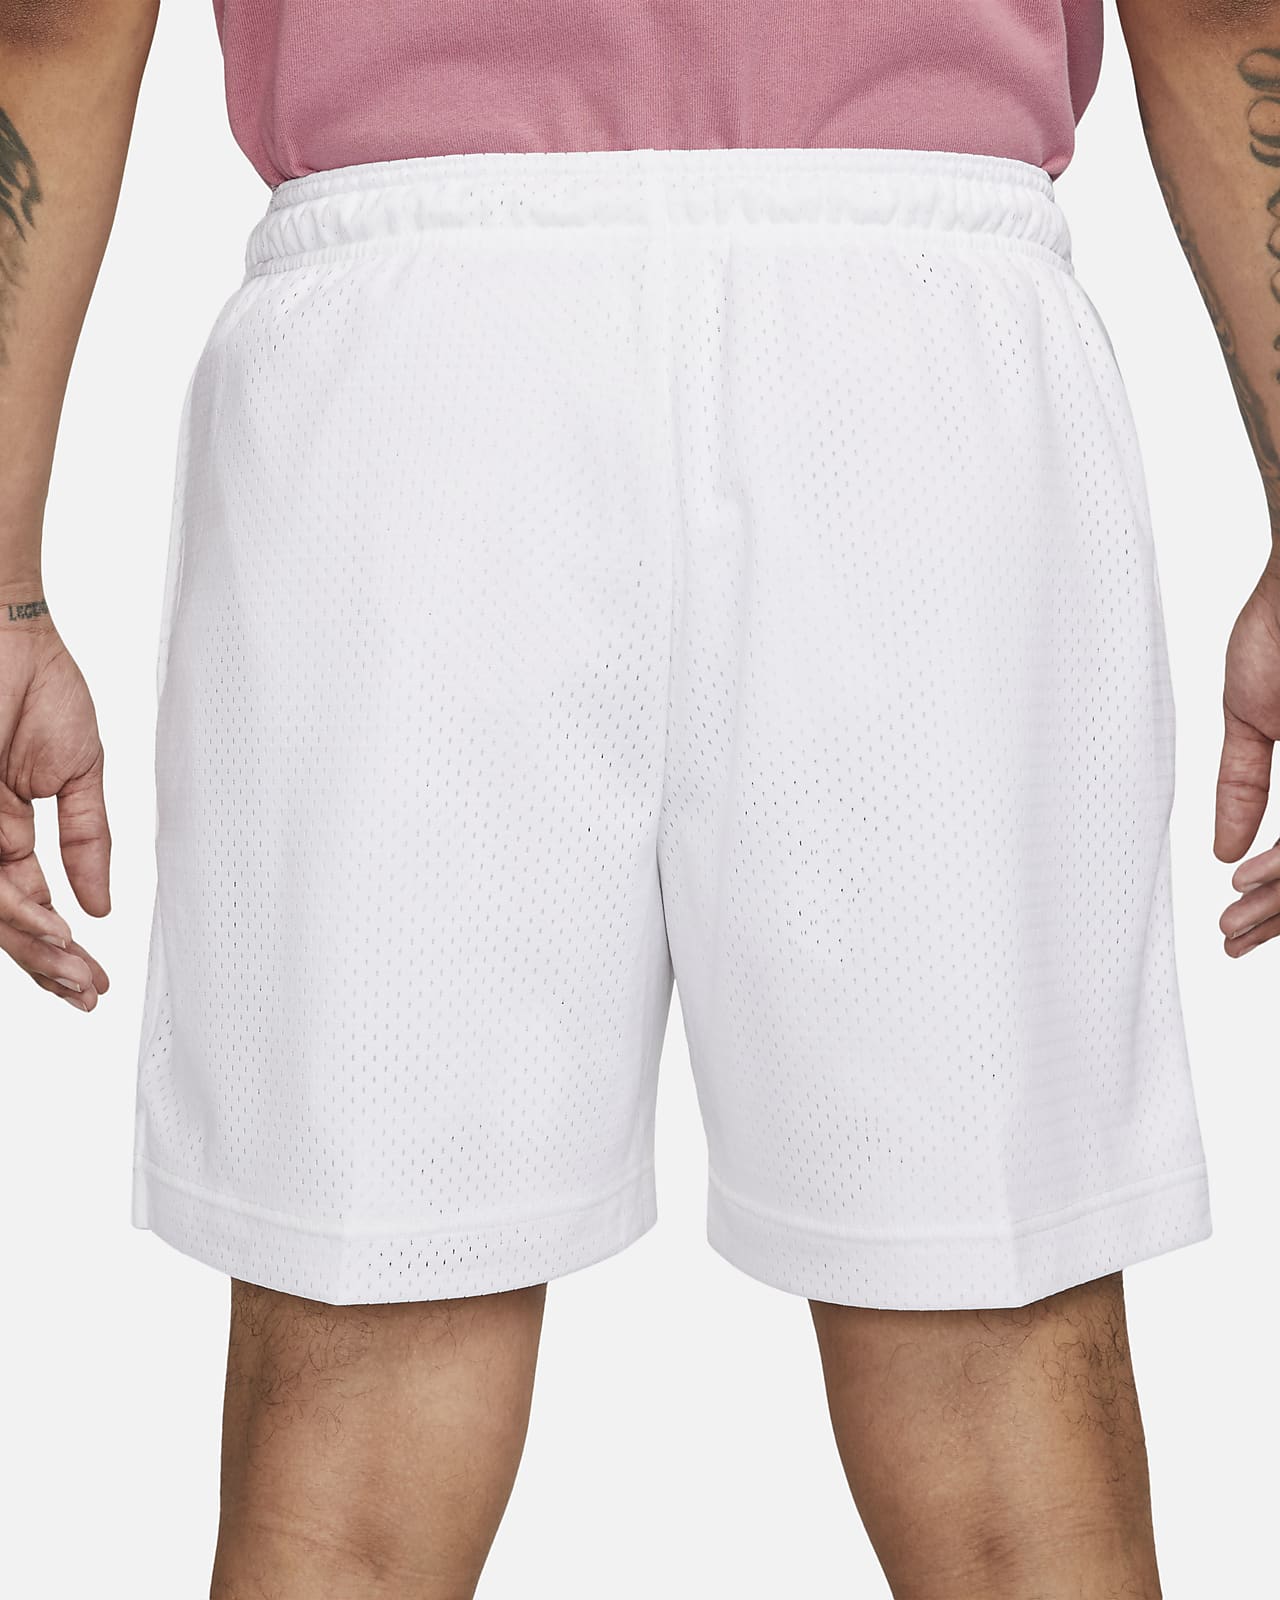 Nike Sportswear Authentics Men\'s Mesh Shorts